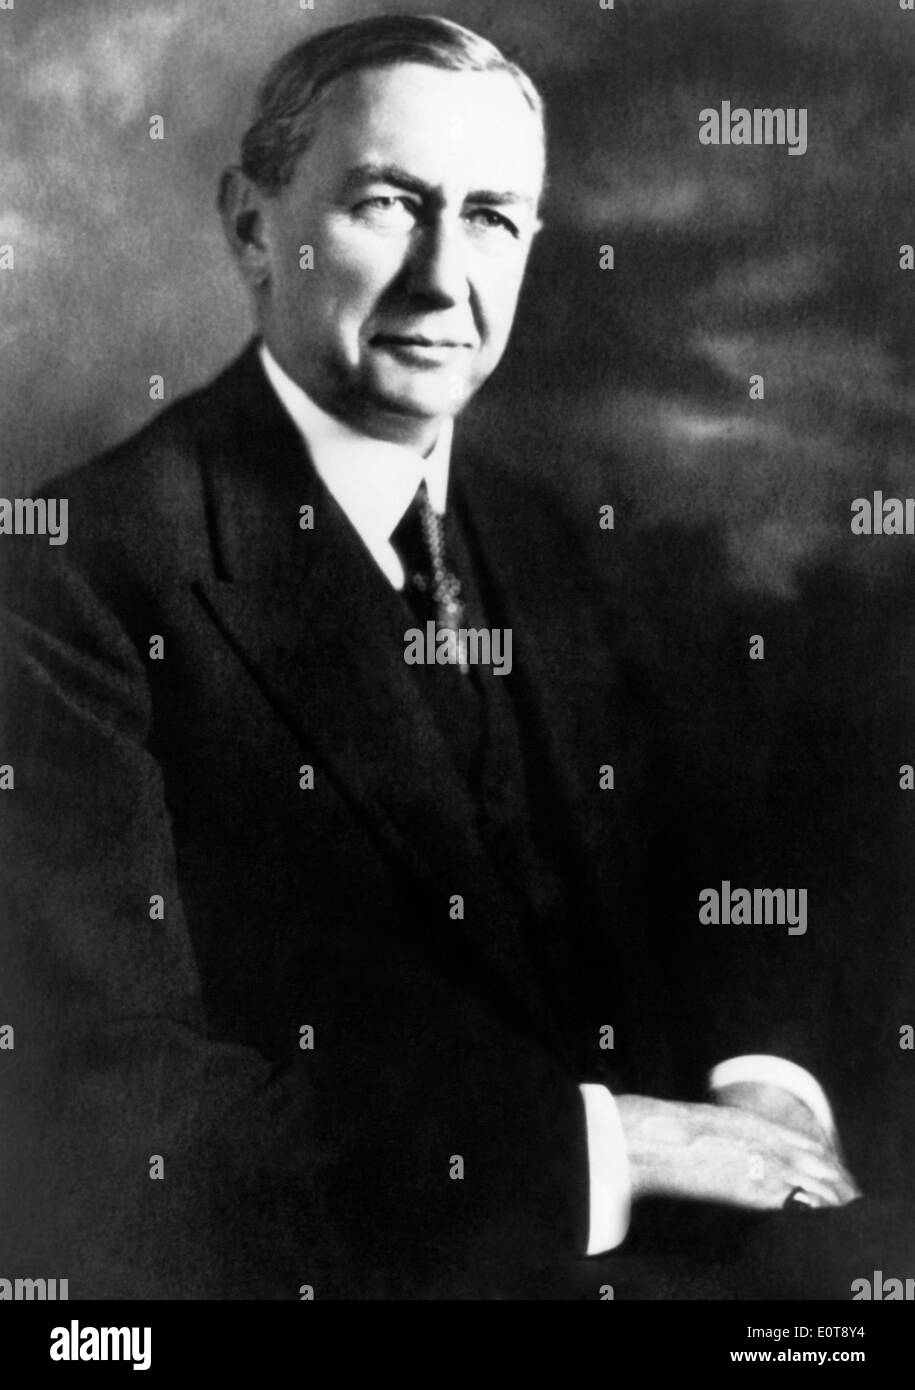 Ivy Lee, Public Relations Expert, Portrait, circa late 1920's Stock Photo -  Alamy